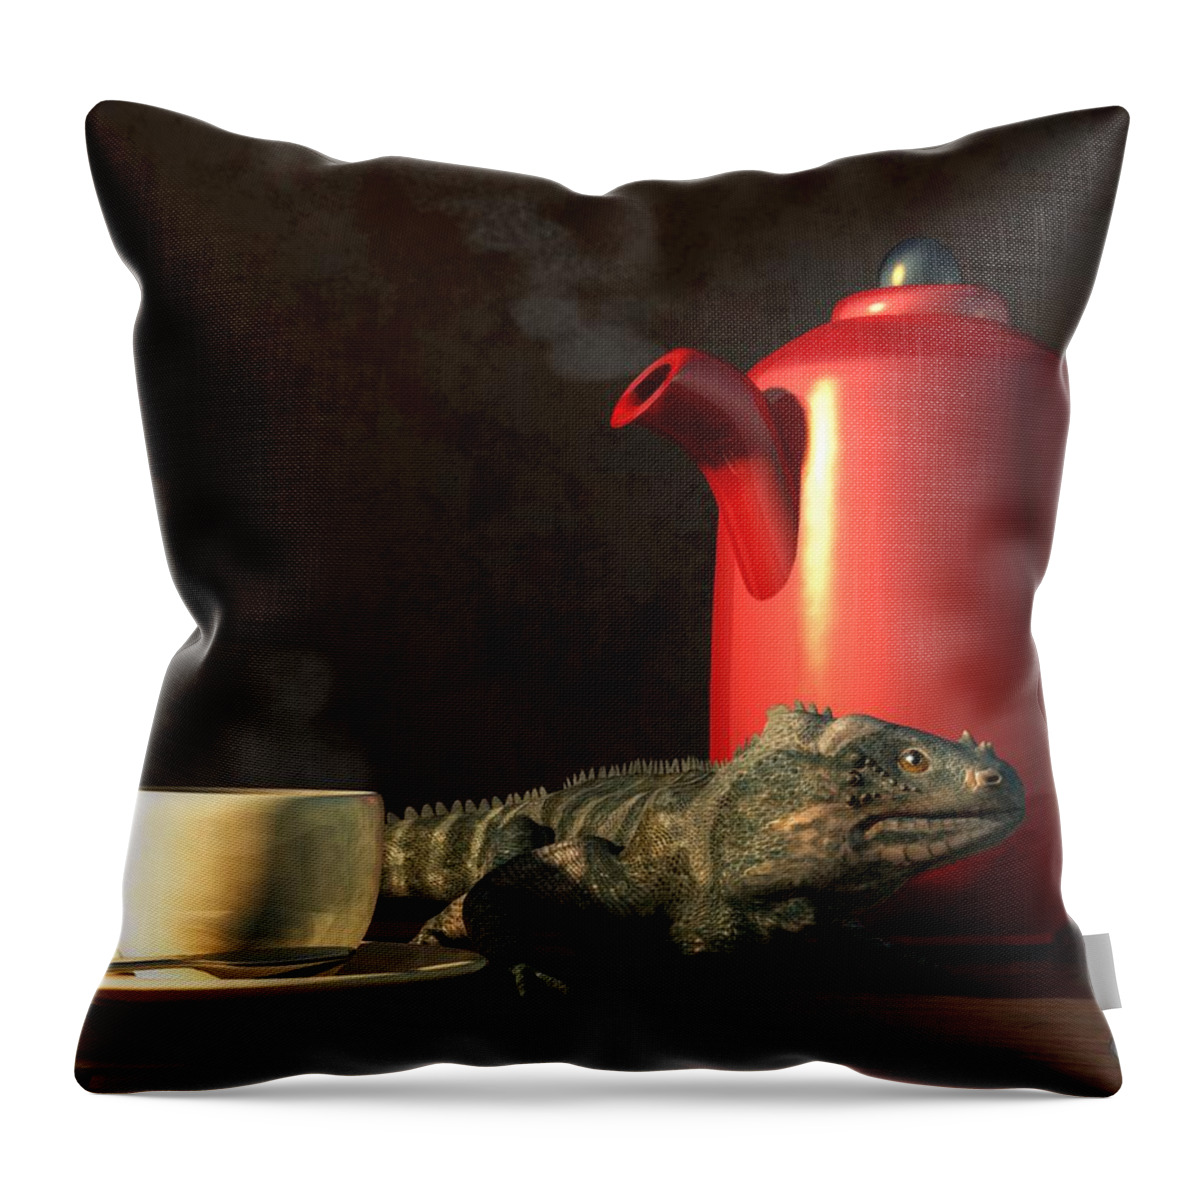 Iguana Coffee Throw Pillow featuring the digital art Iguana Coffee by Daniel Eskridge